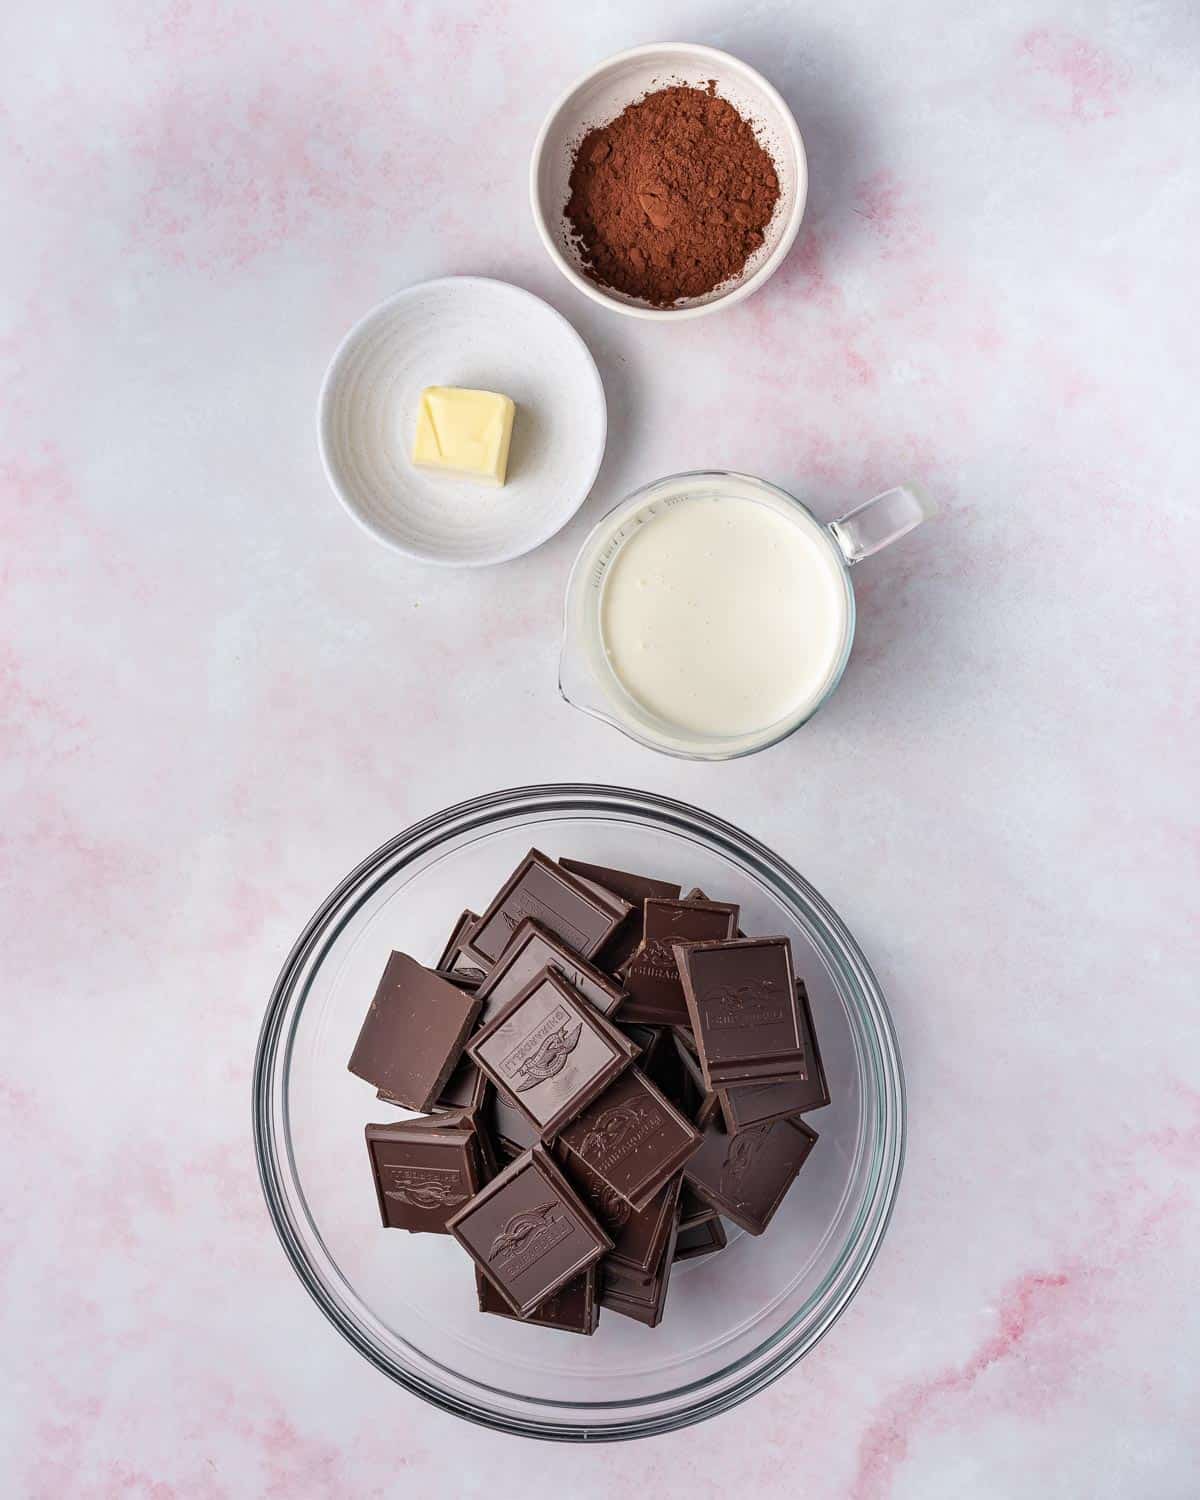 Ingredients needed to make nama chocolate.